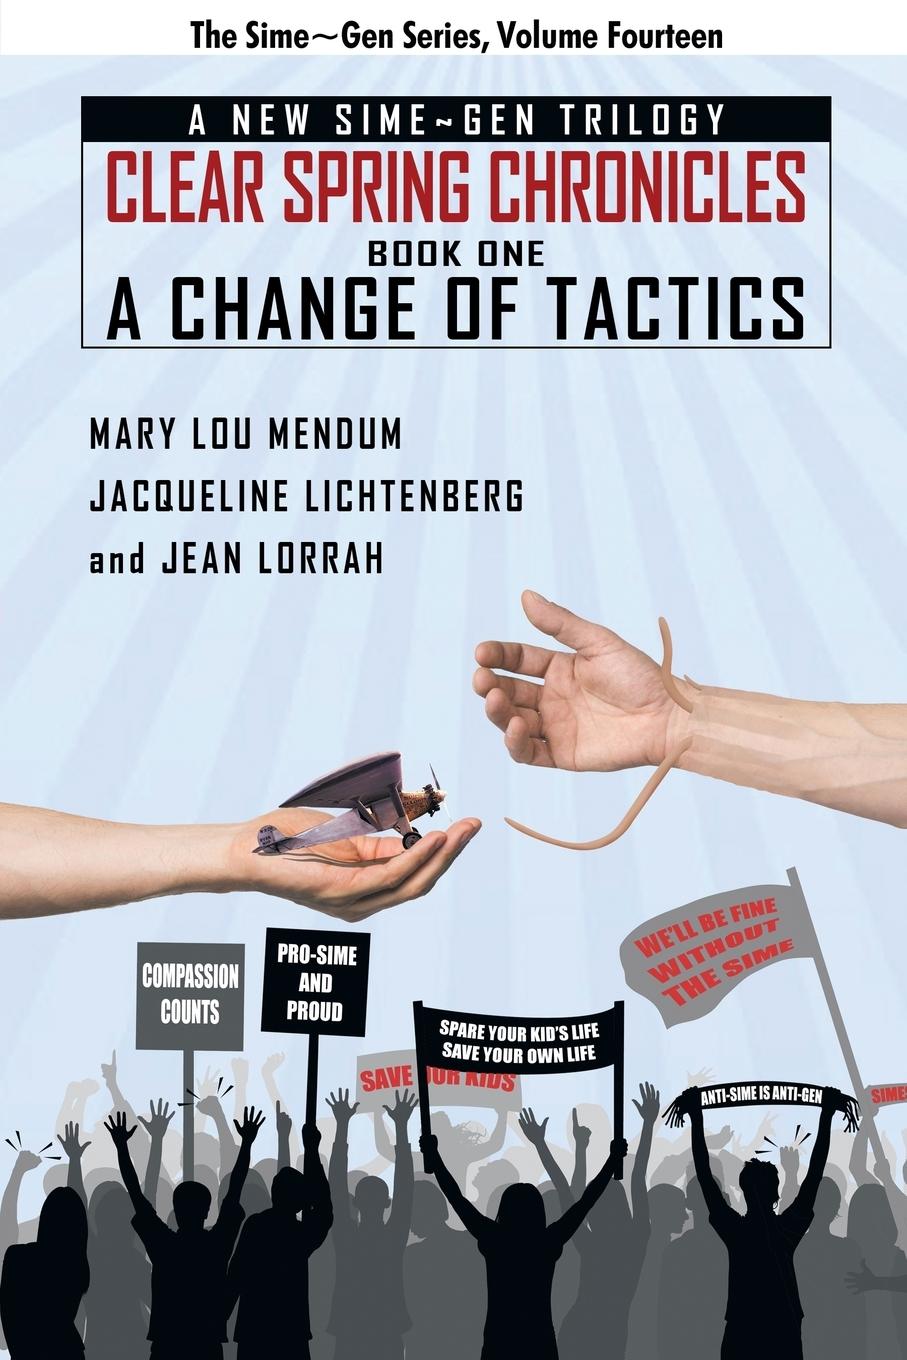 A Change of Tactics: A Sime Gen Novel: Clear Springs Chronicles #1 - Lichtenberg, Jacqueline|Mendum, Mary Lou|Lorrah, Jean